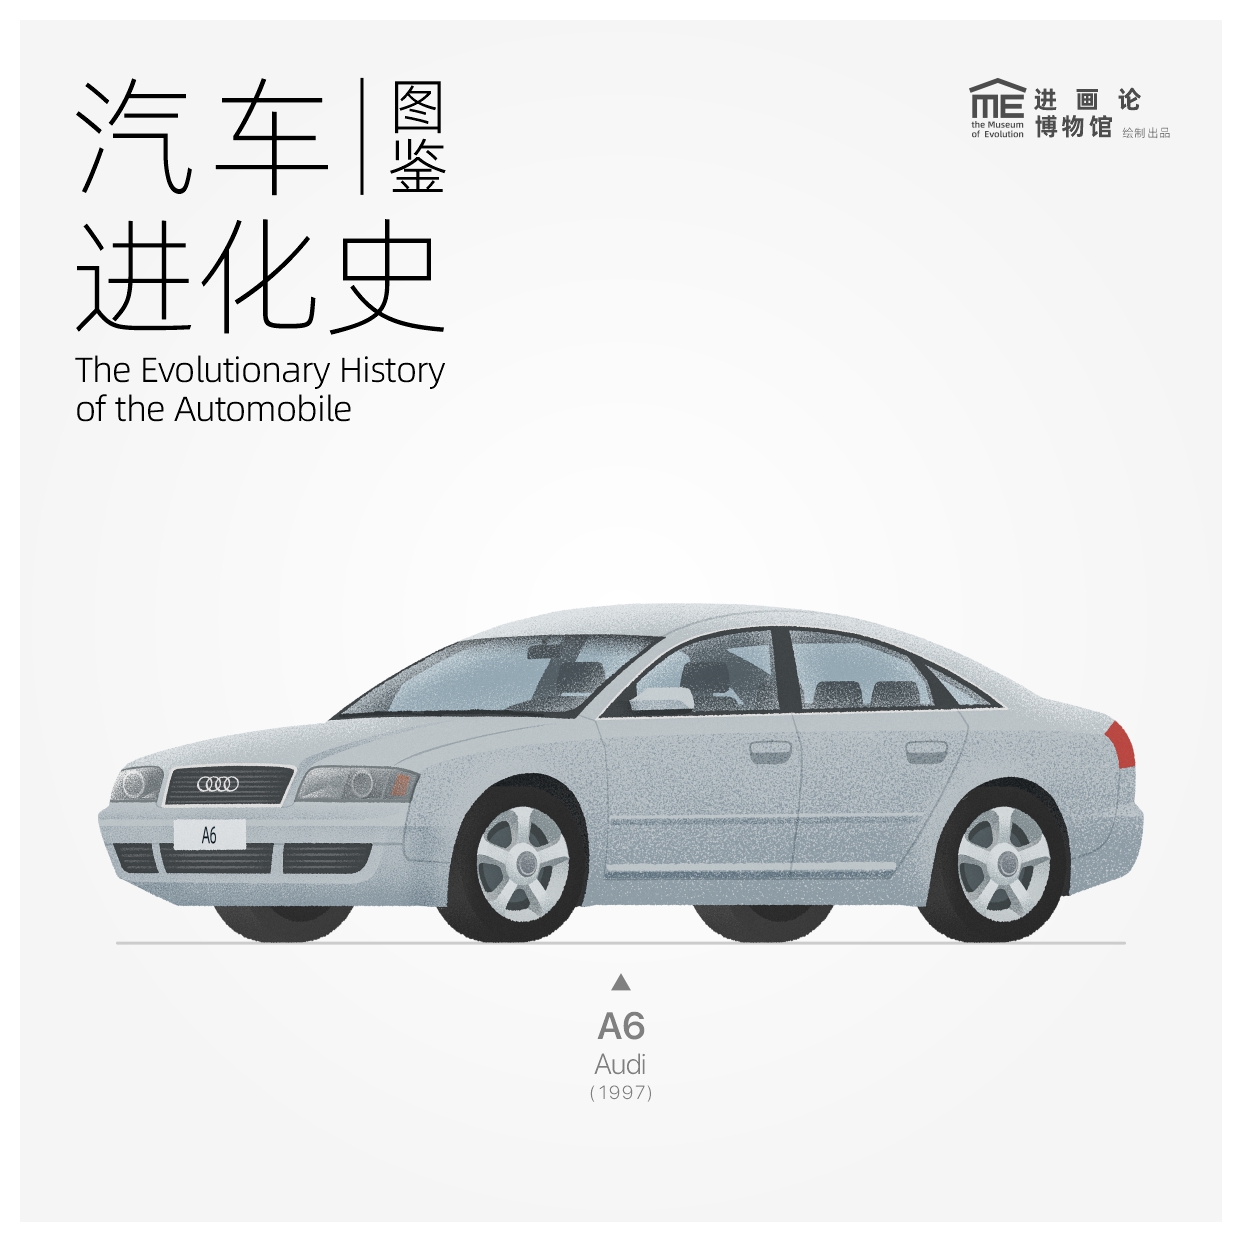  百年汽车进化史图鉴｜The Evolution of Automobile